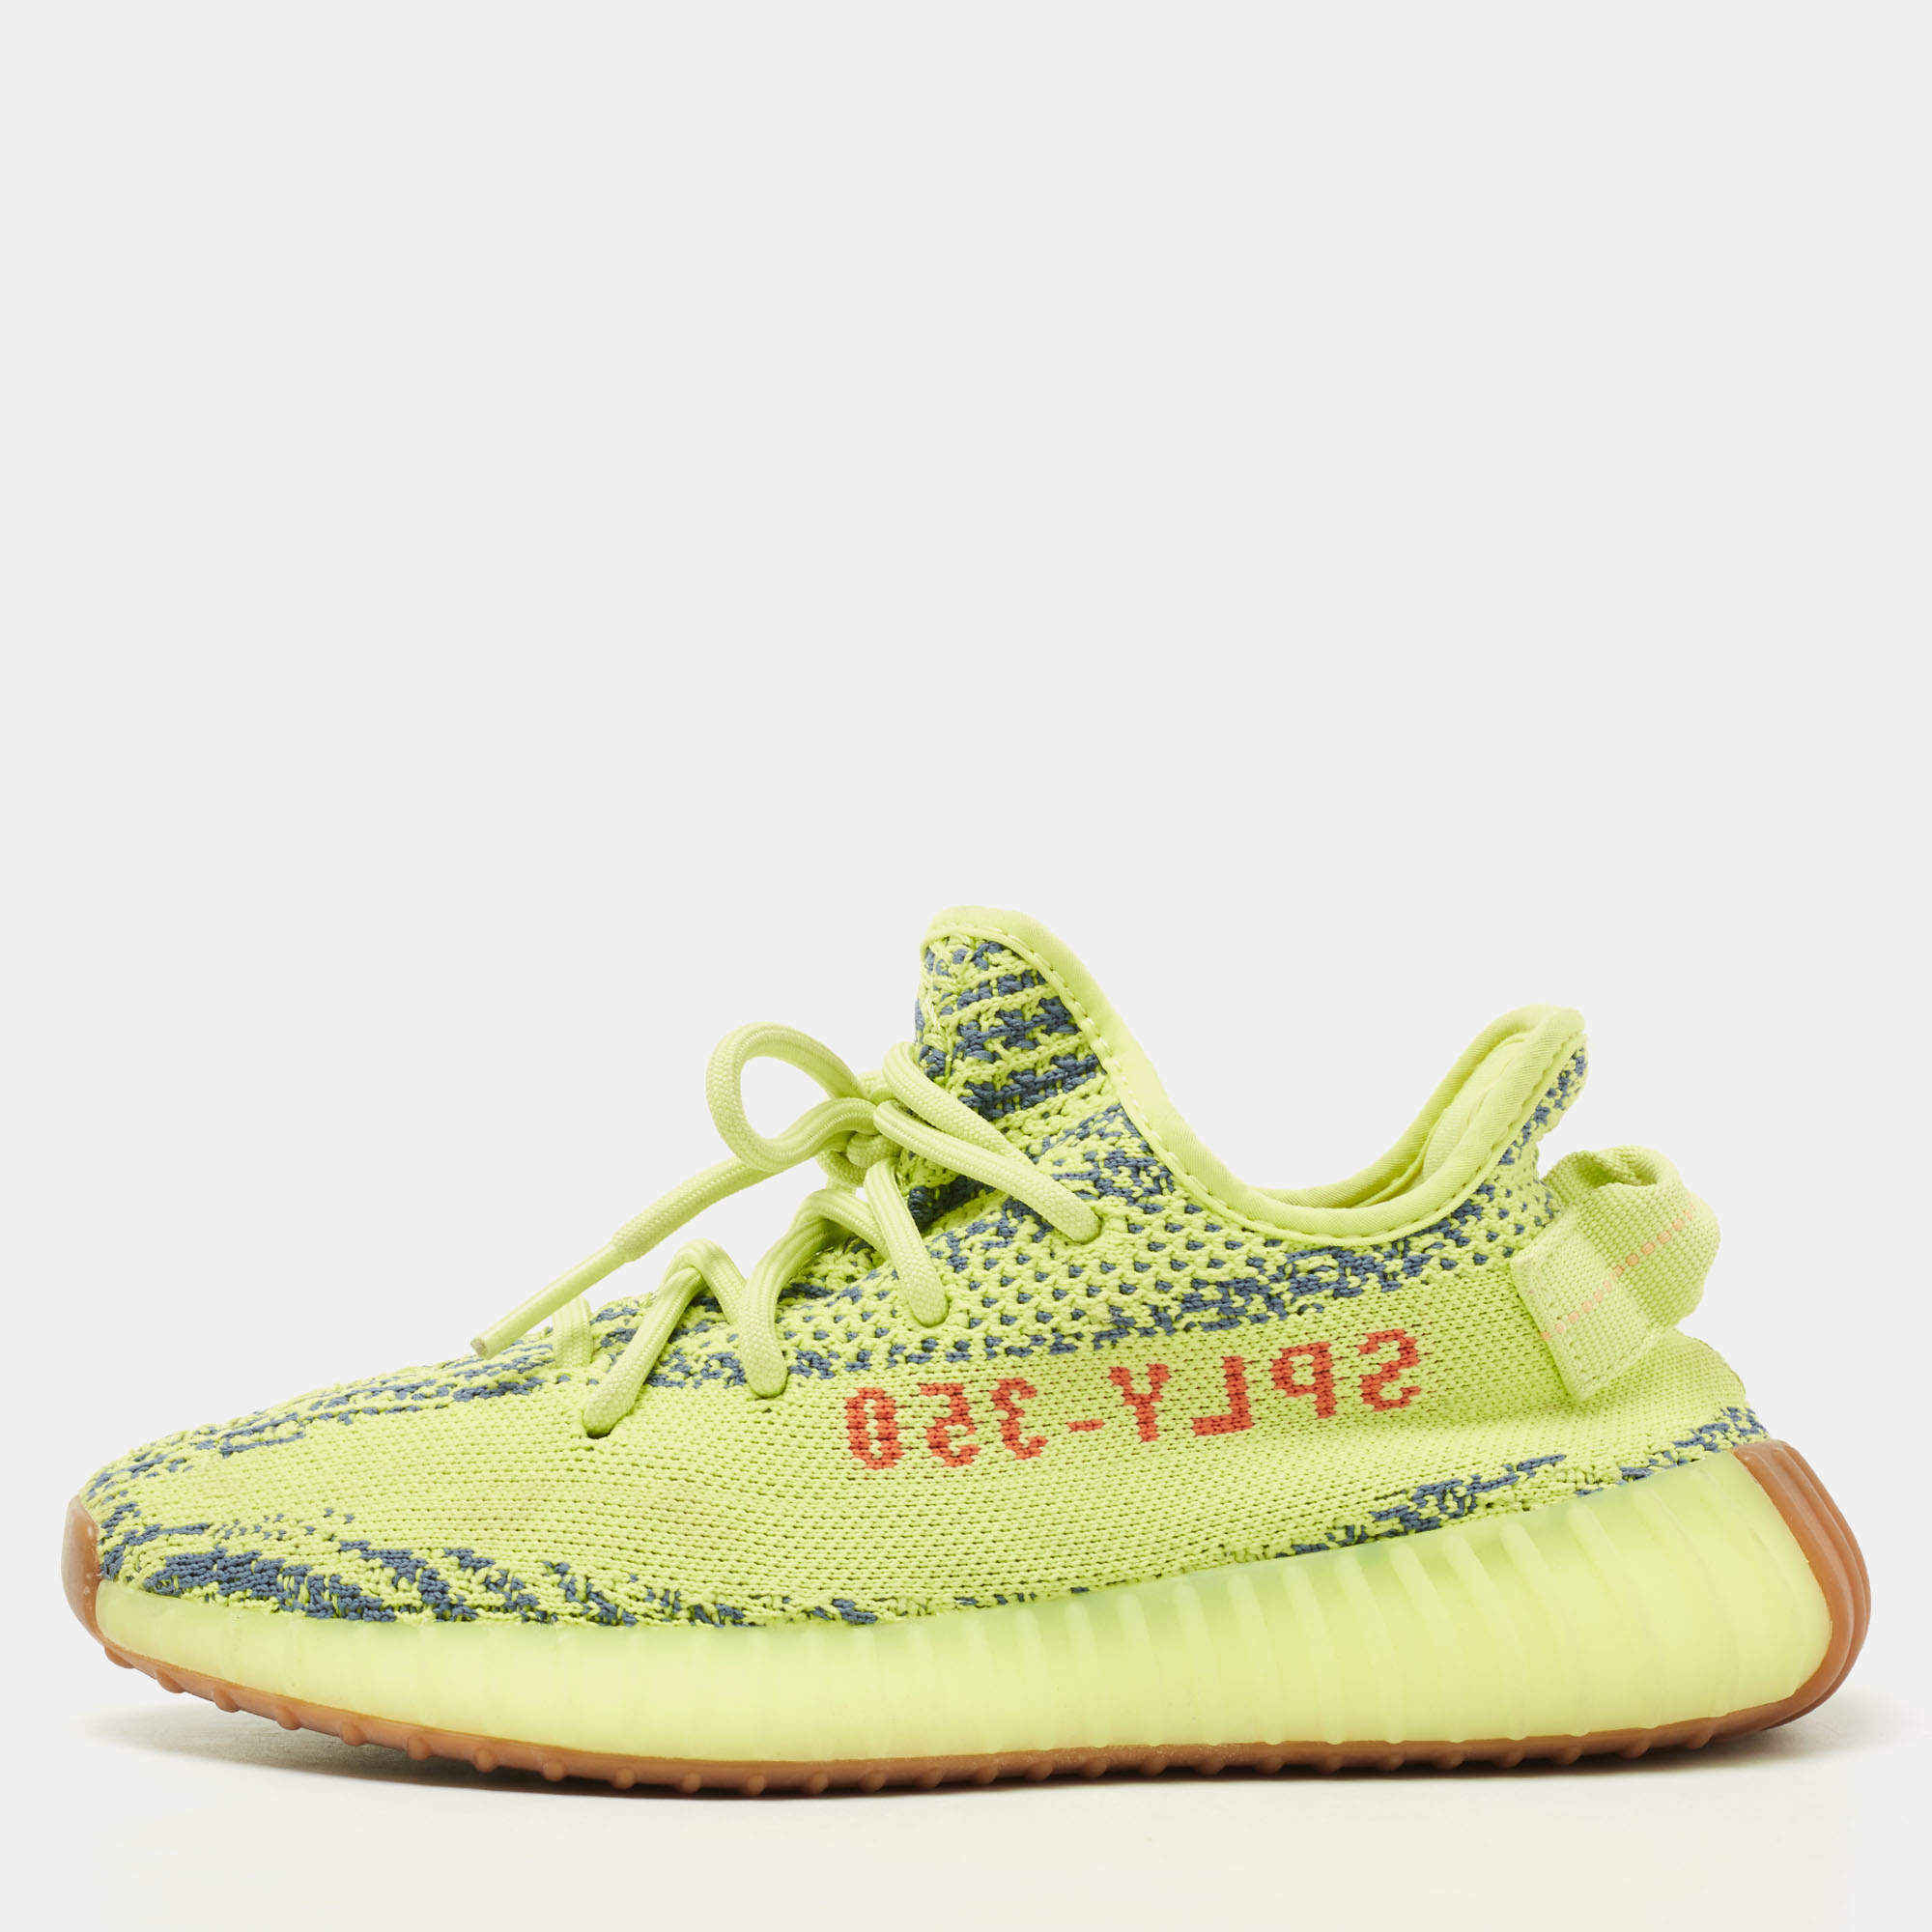 Yeezy x Adidas Neon Yellow Knit Fabric Boost 350 V2 Semi Frozen Yellow Sneakers Size 38